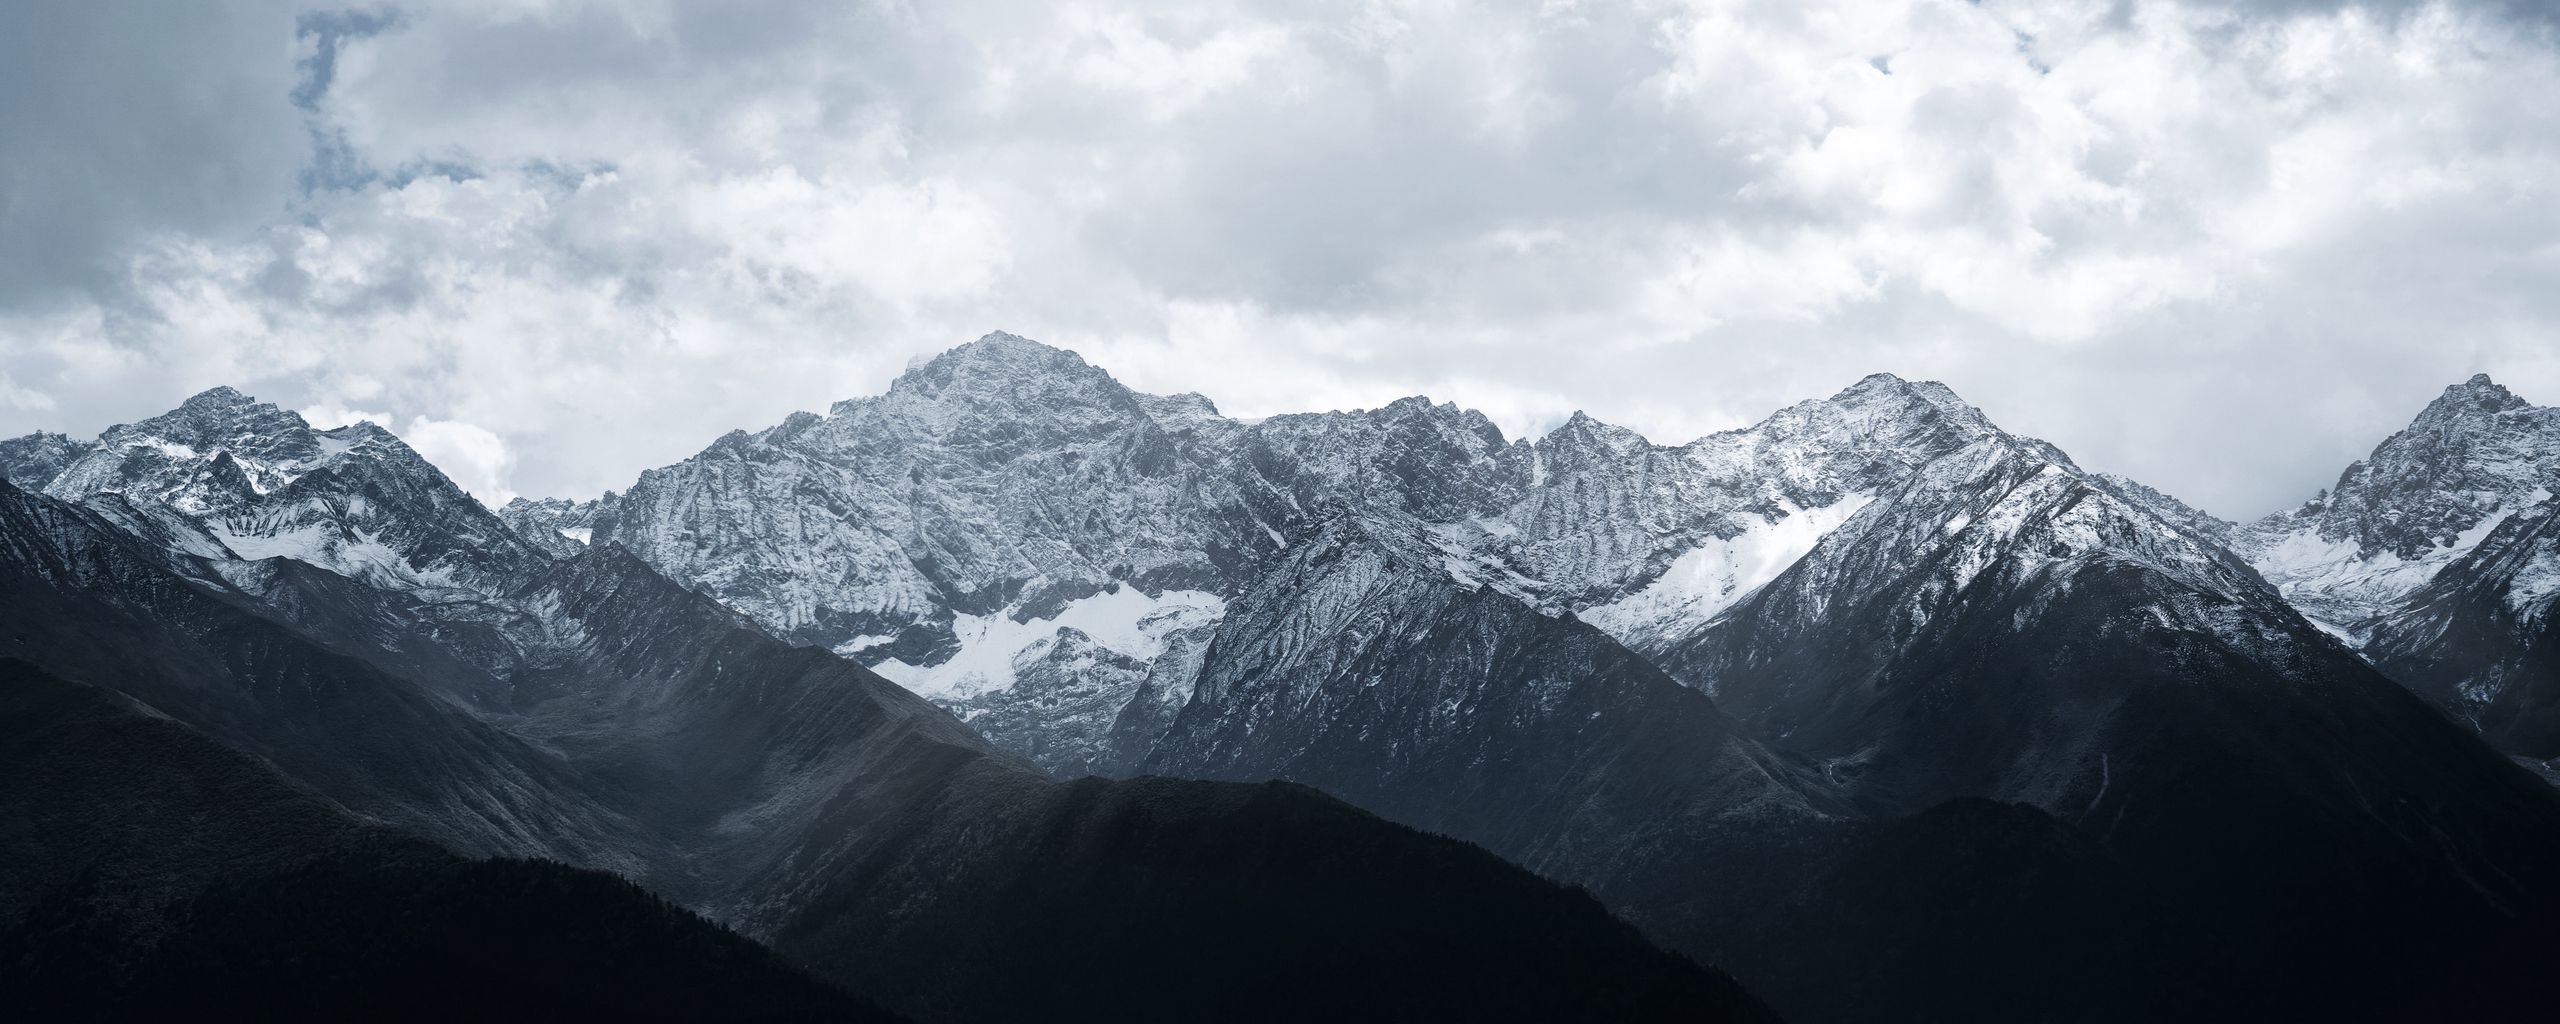 Download wallpaper 2560x1024 mountains, mountain range, peaks, clouds